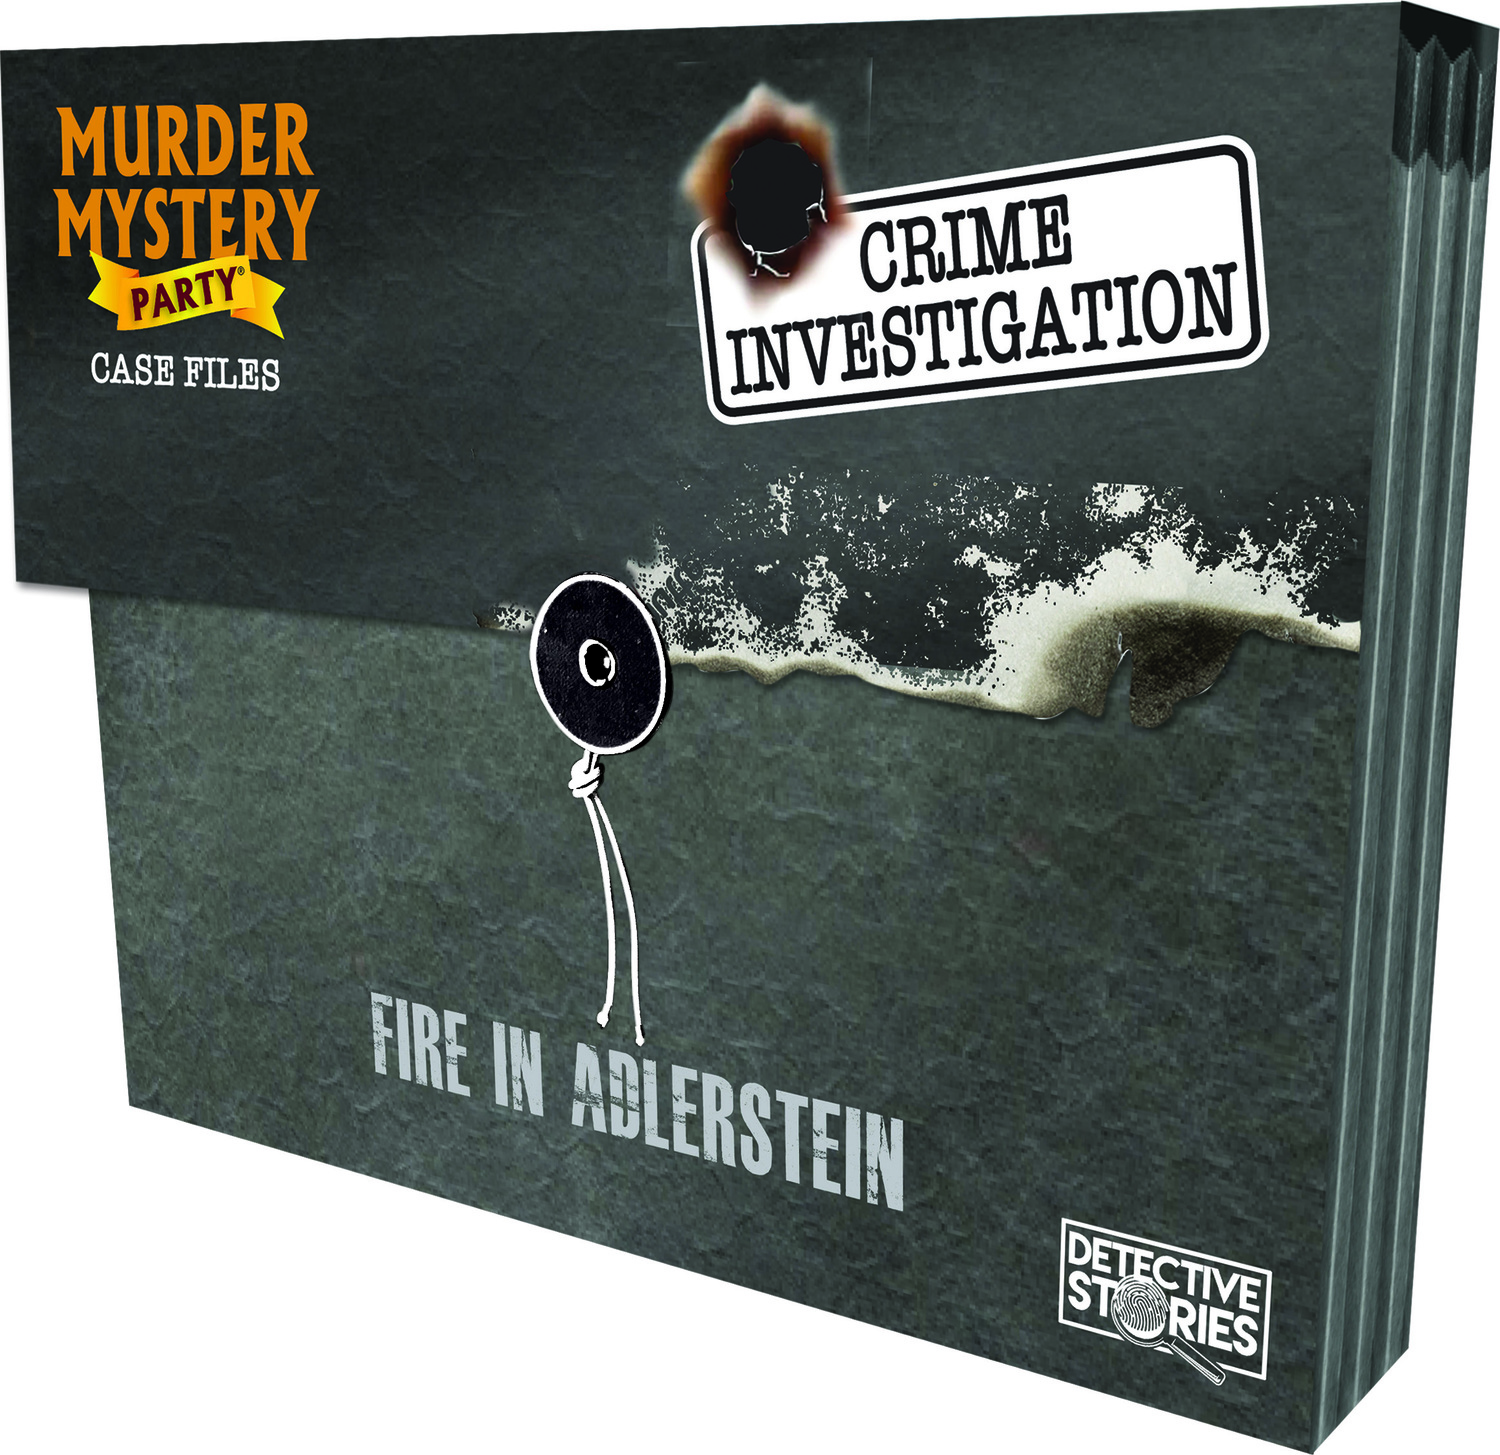  Murder Mystery Party Case Files: Fire in Adlerstein